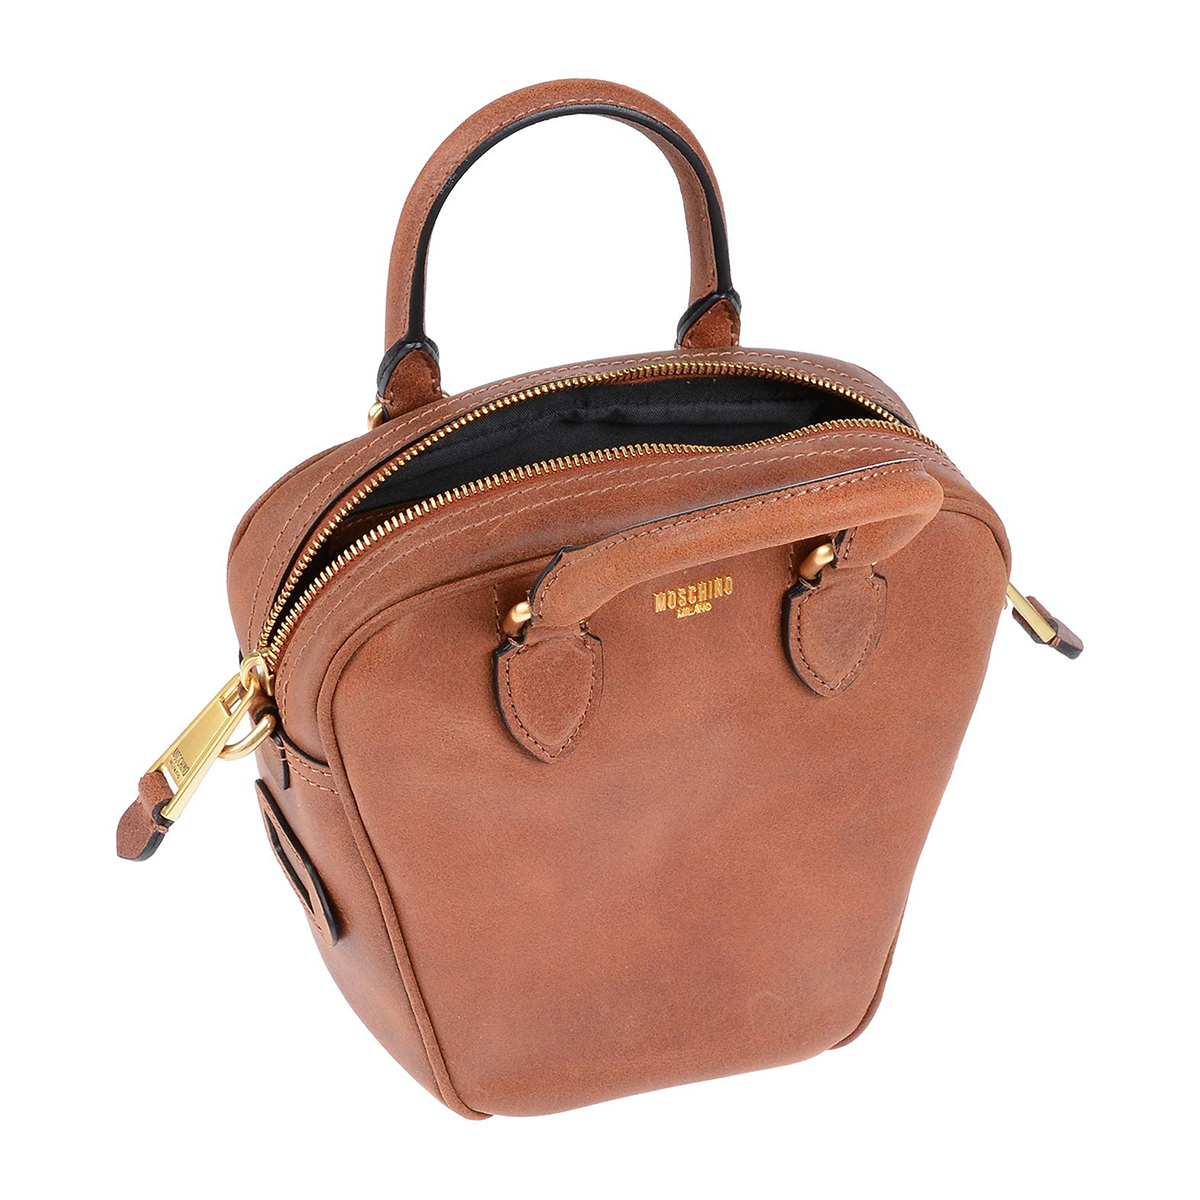 Moschino Handbags & Accessories: Sale | Nordstrom